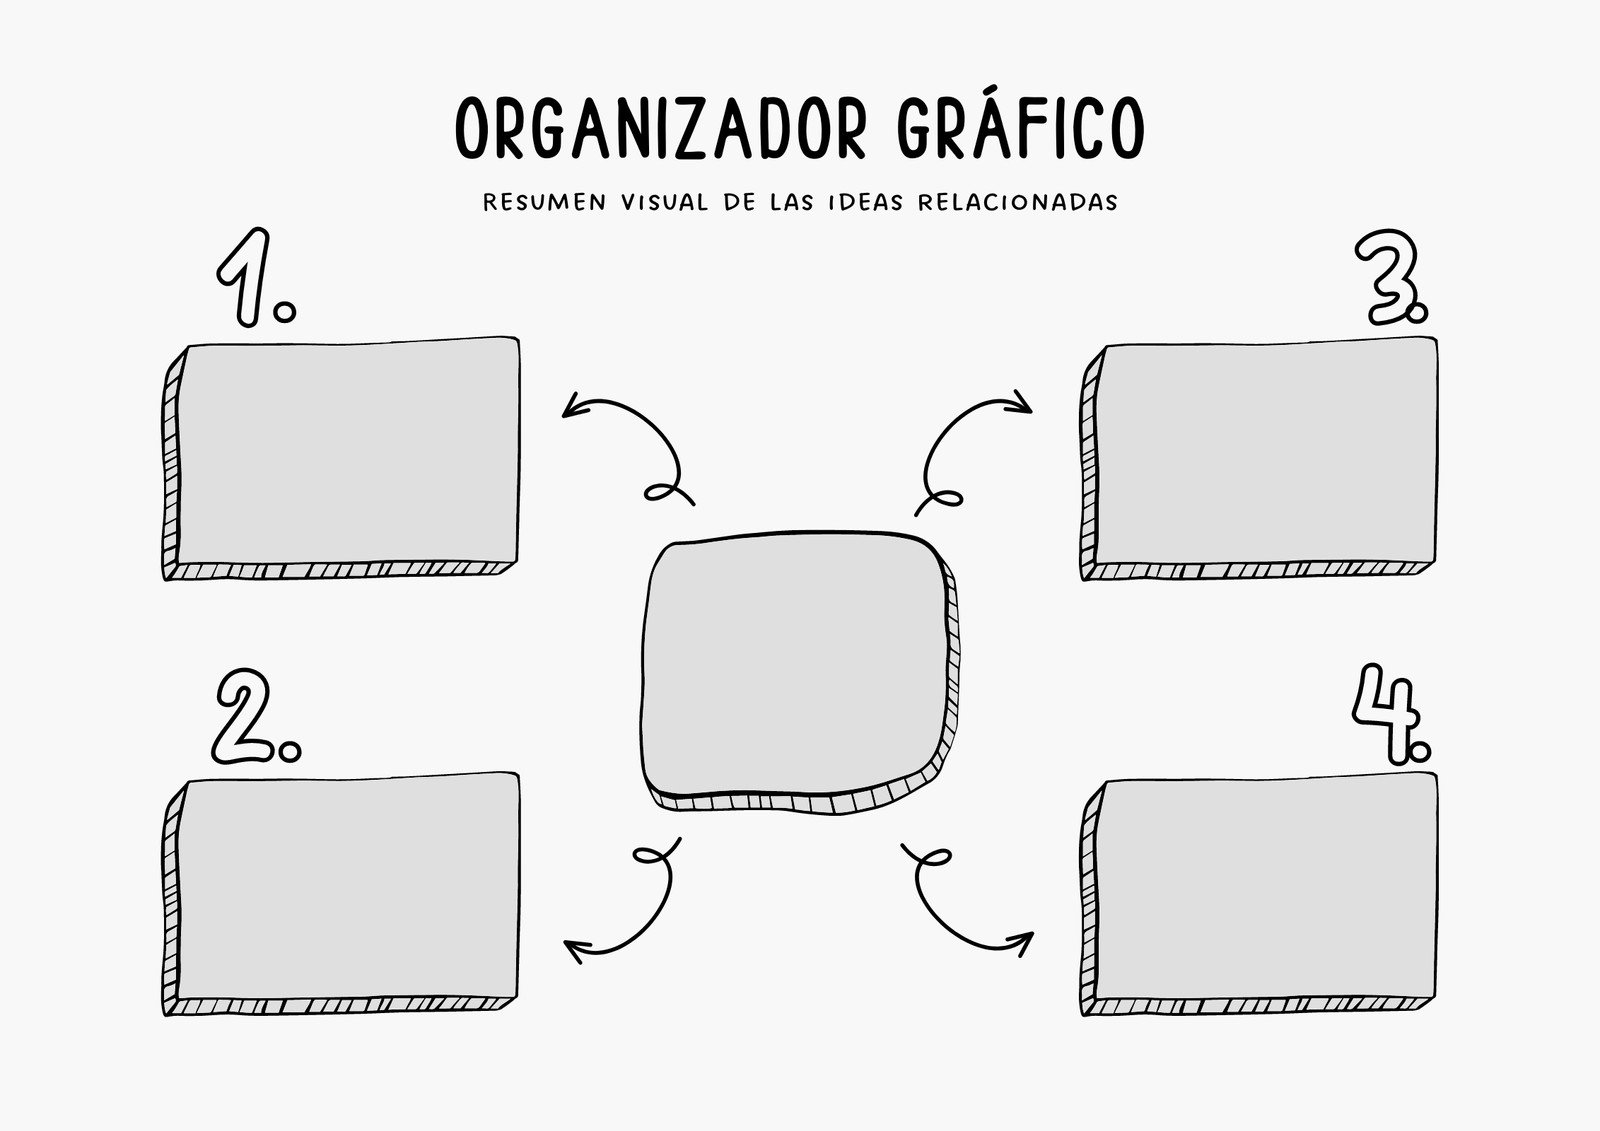 Organizador Gráfico Mapa Mental Idea Principal e Ideas Secundarias Relacionadas con Flechas Doodle Garabatos Blanco y Negro